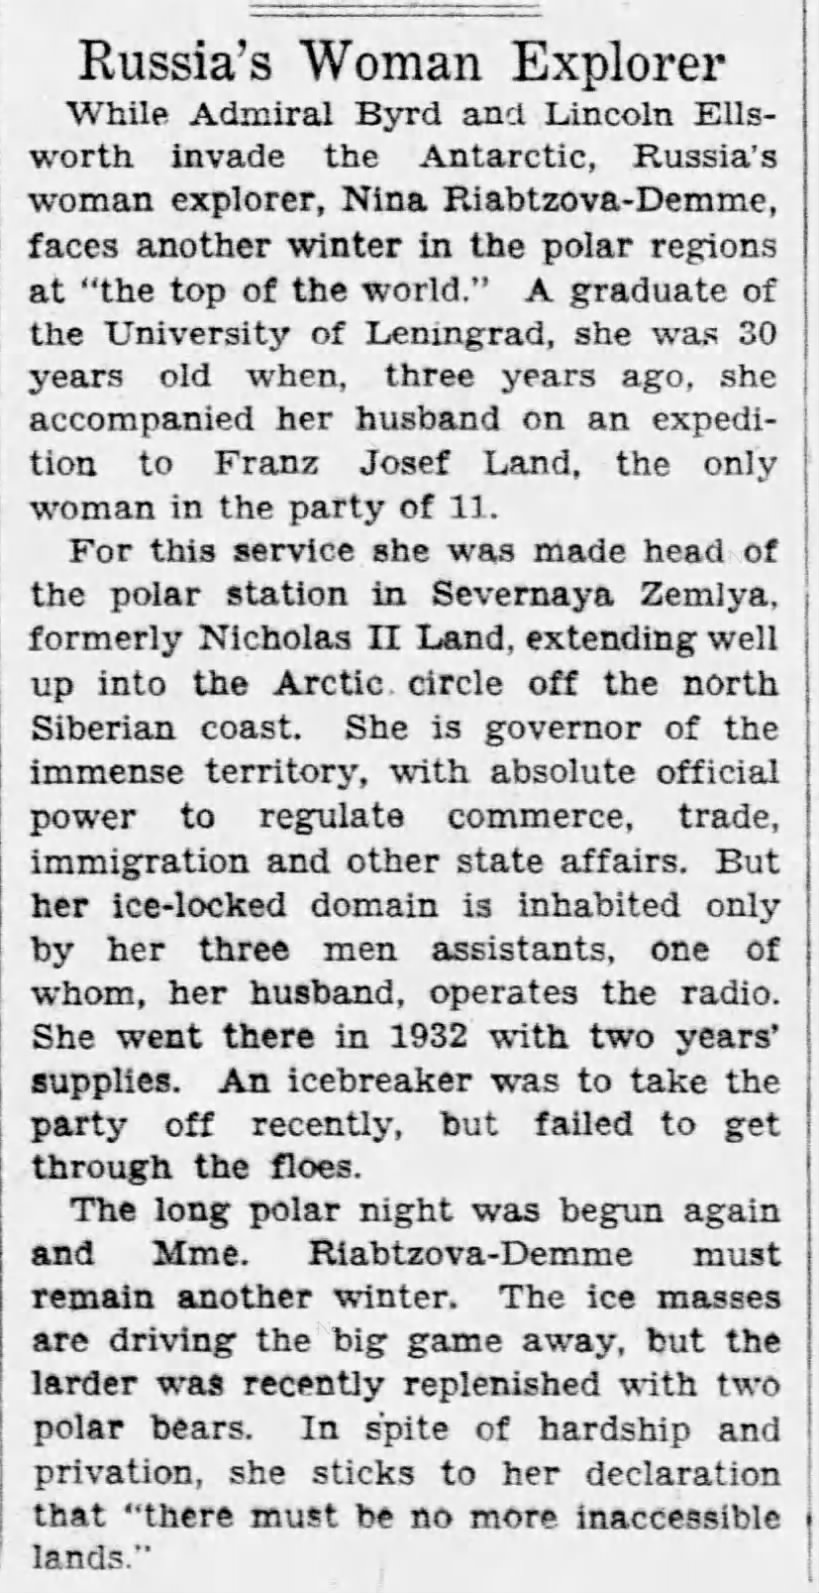 Russia's Woman Explorer. 11 December 1933. Miami, Florida: The Miami News. p 6